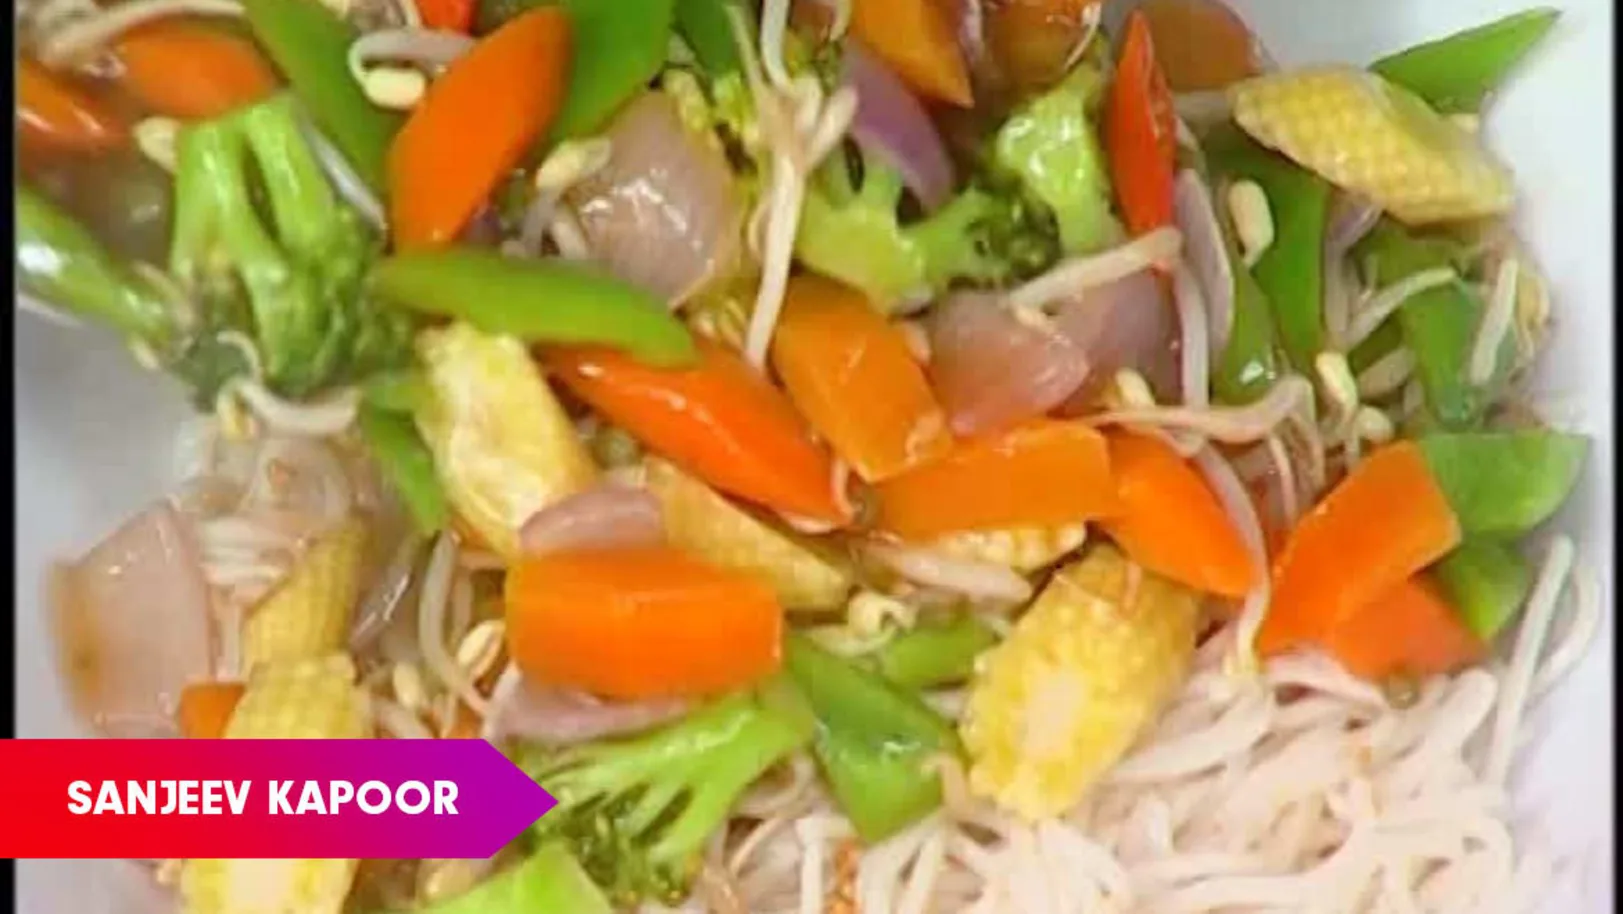 Noodles with Stir Fried Vegetables by Sanjeev Kapoor - Khana Khazana Episode 444